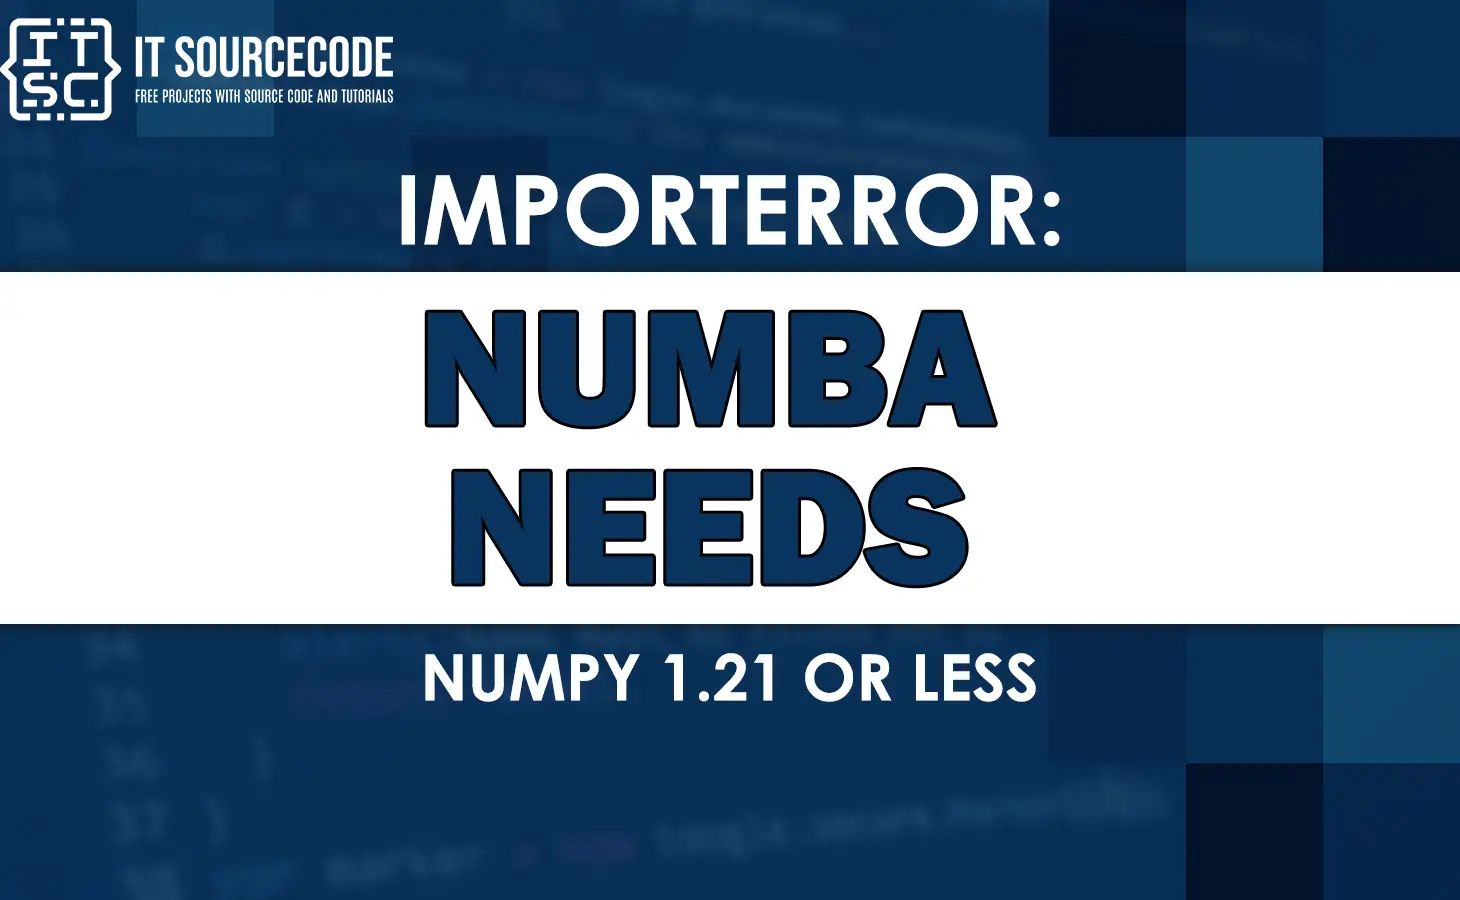 Importerror numba needs numpy 1.21 or less